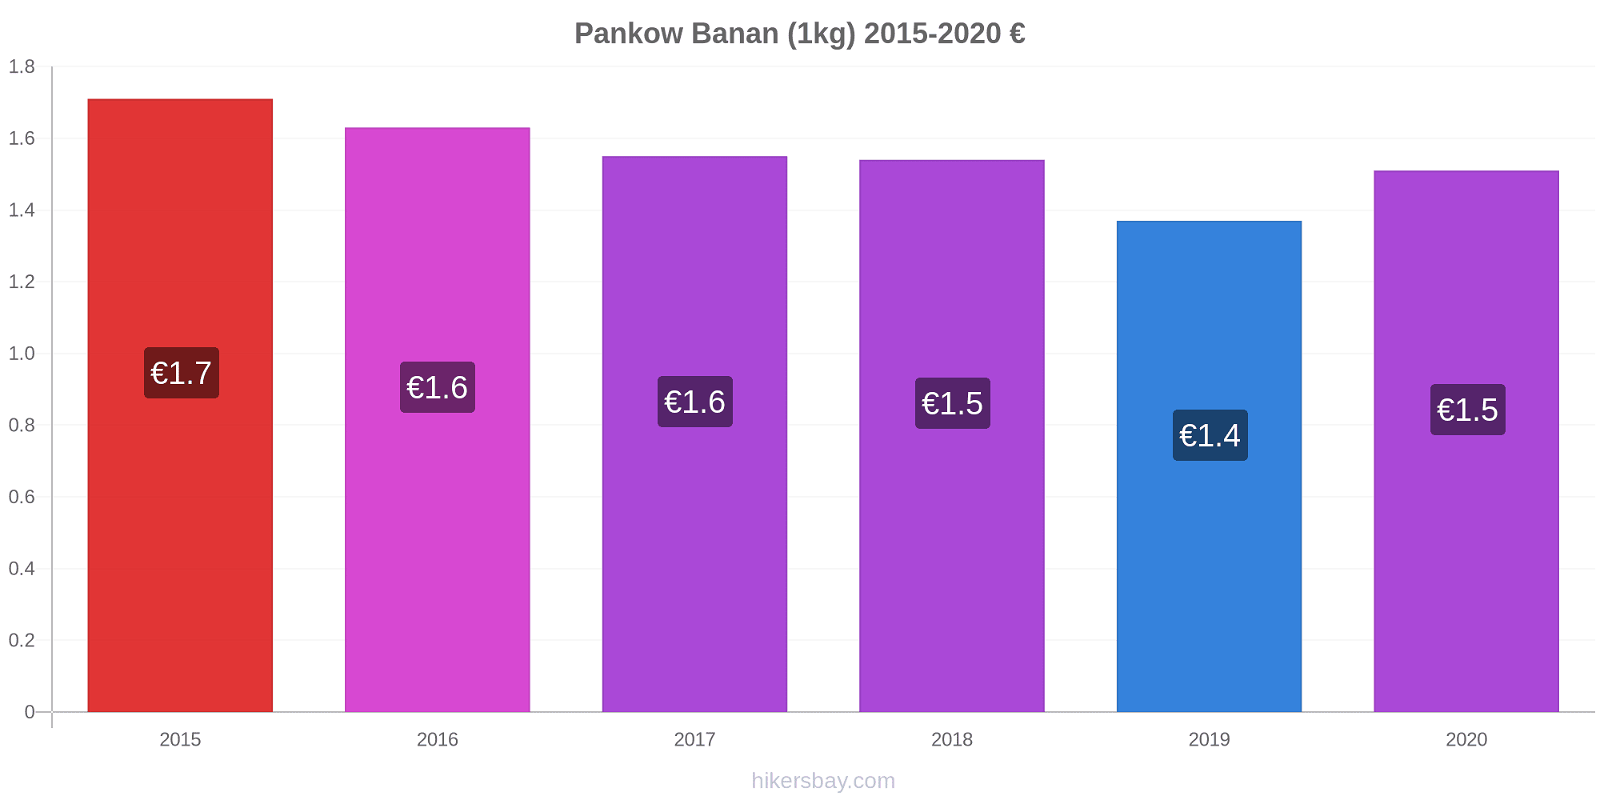 Pankow prisendringer Banan (1kg) hikersbay.com